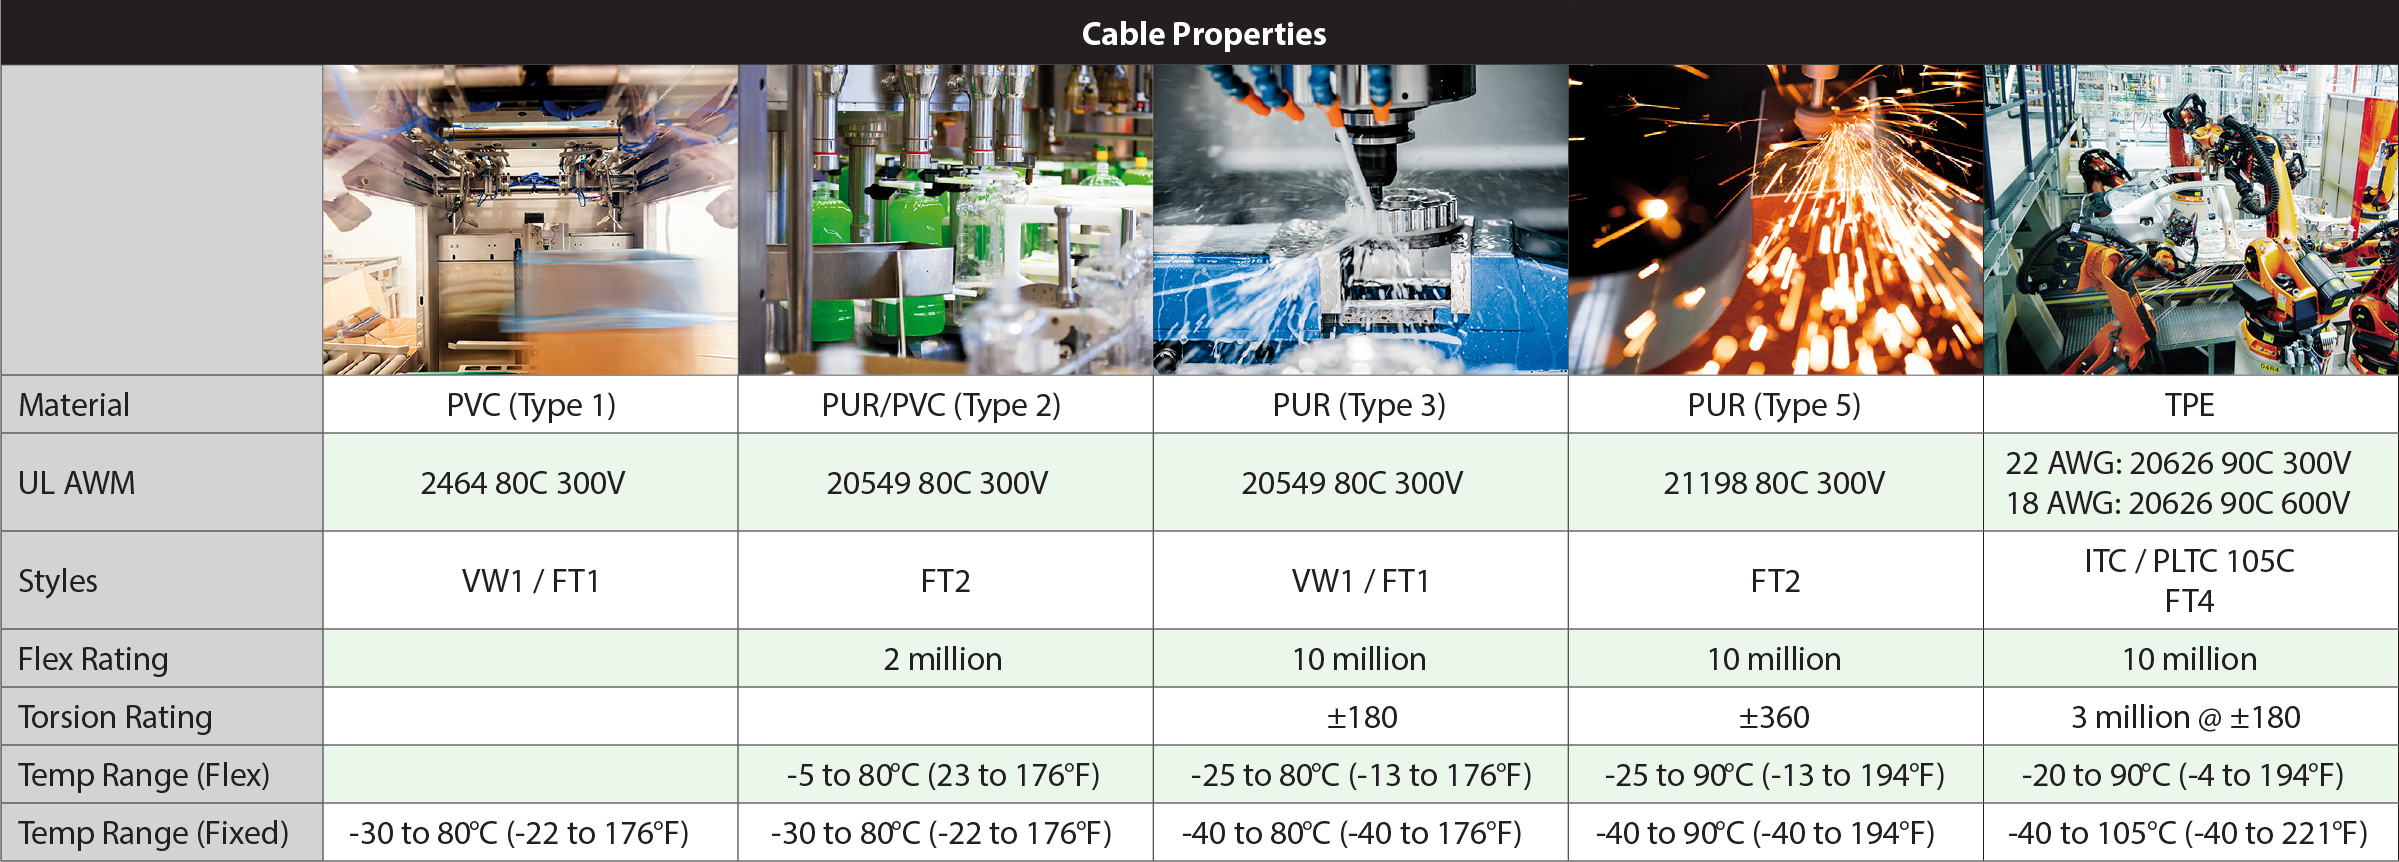 Murrelektronik Bulk Cable spooled in USA